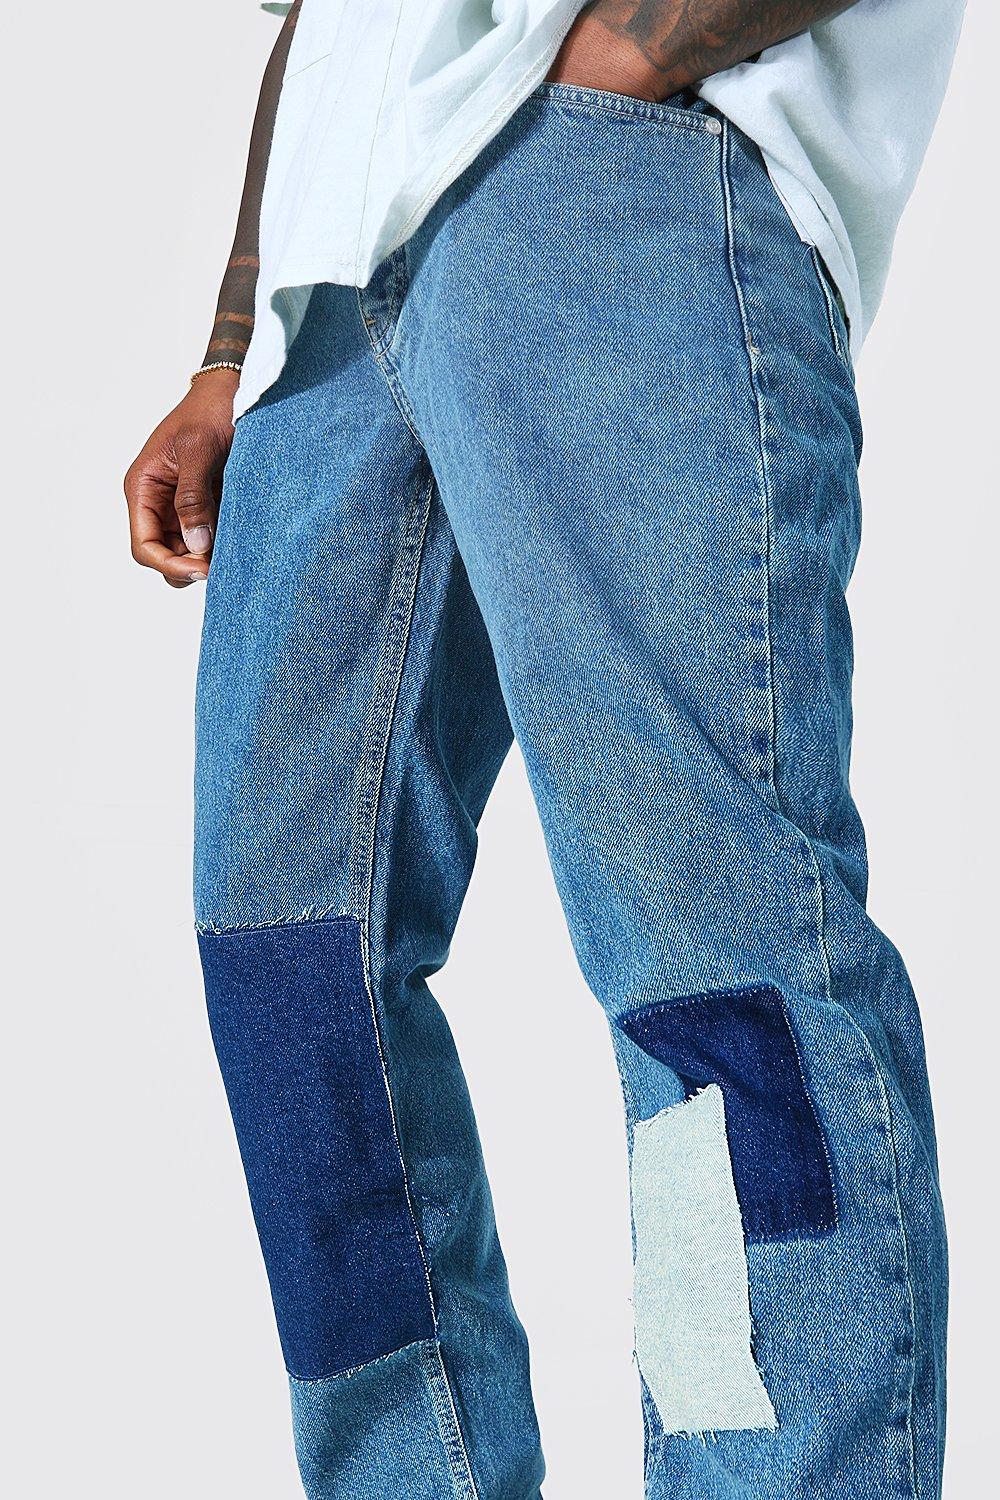 FDMTL, Raw Edge Striped Patchwork Straight Leg Jeans, Men